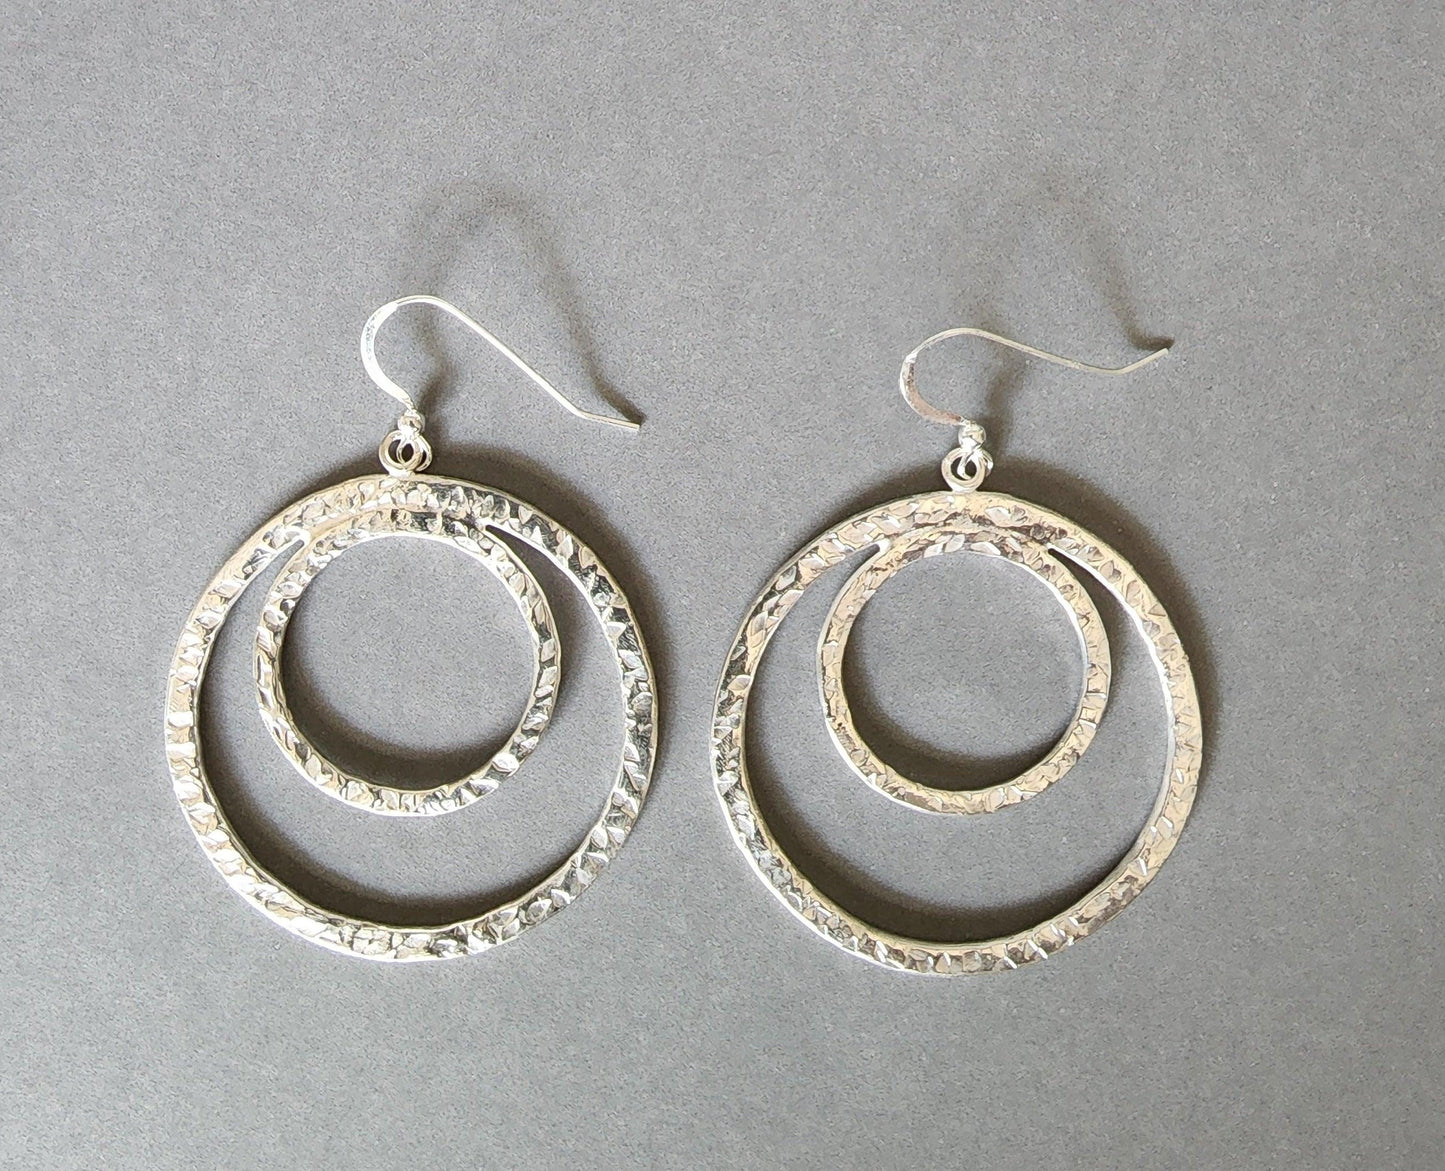 Handmade Sterling Silver Textured Double Hoop Earrings - Gilded Heart Designs